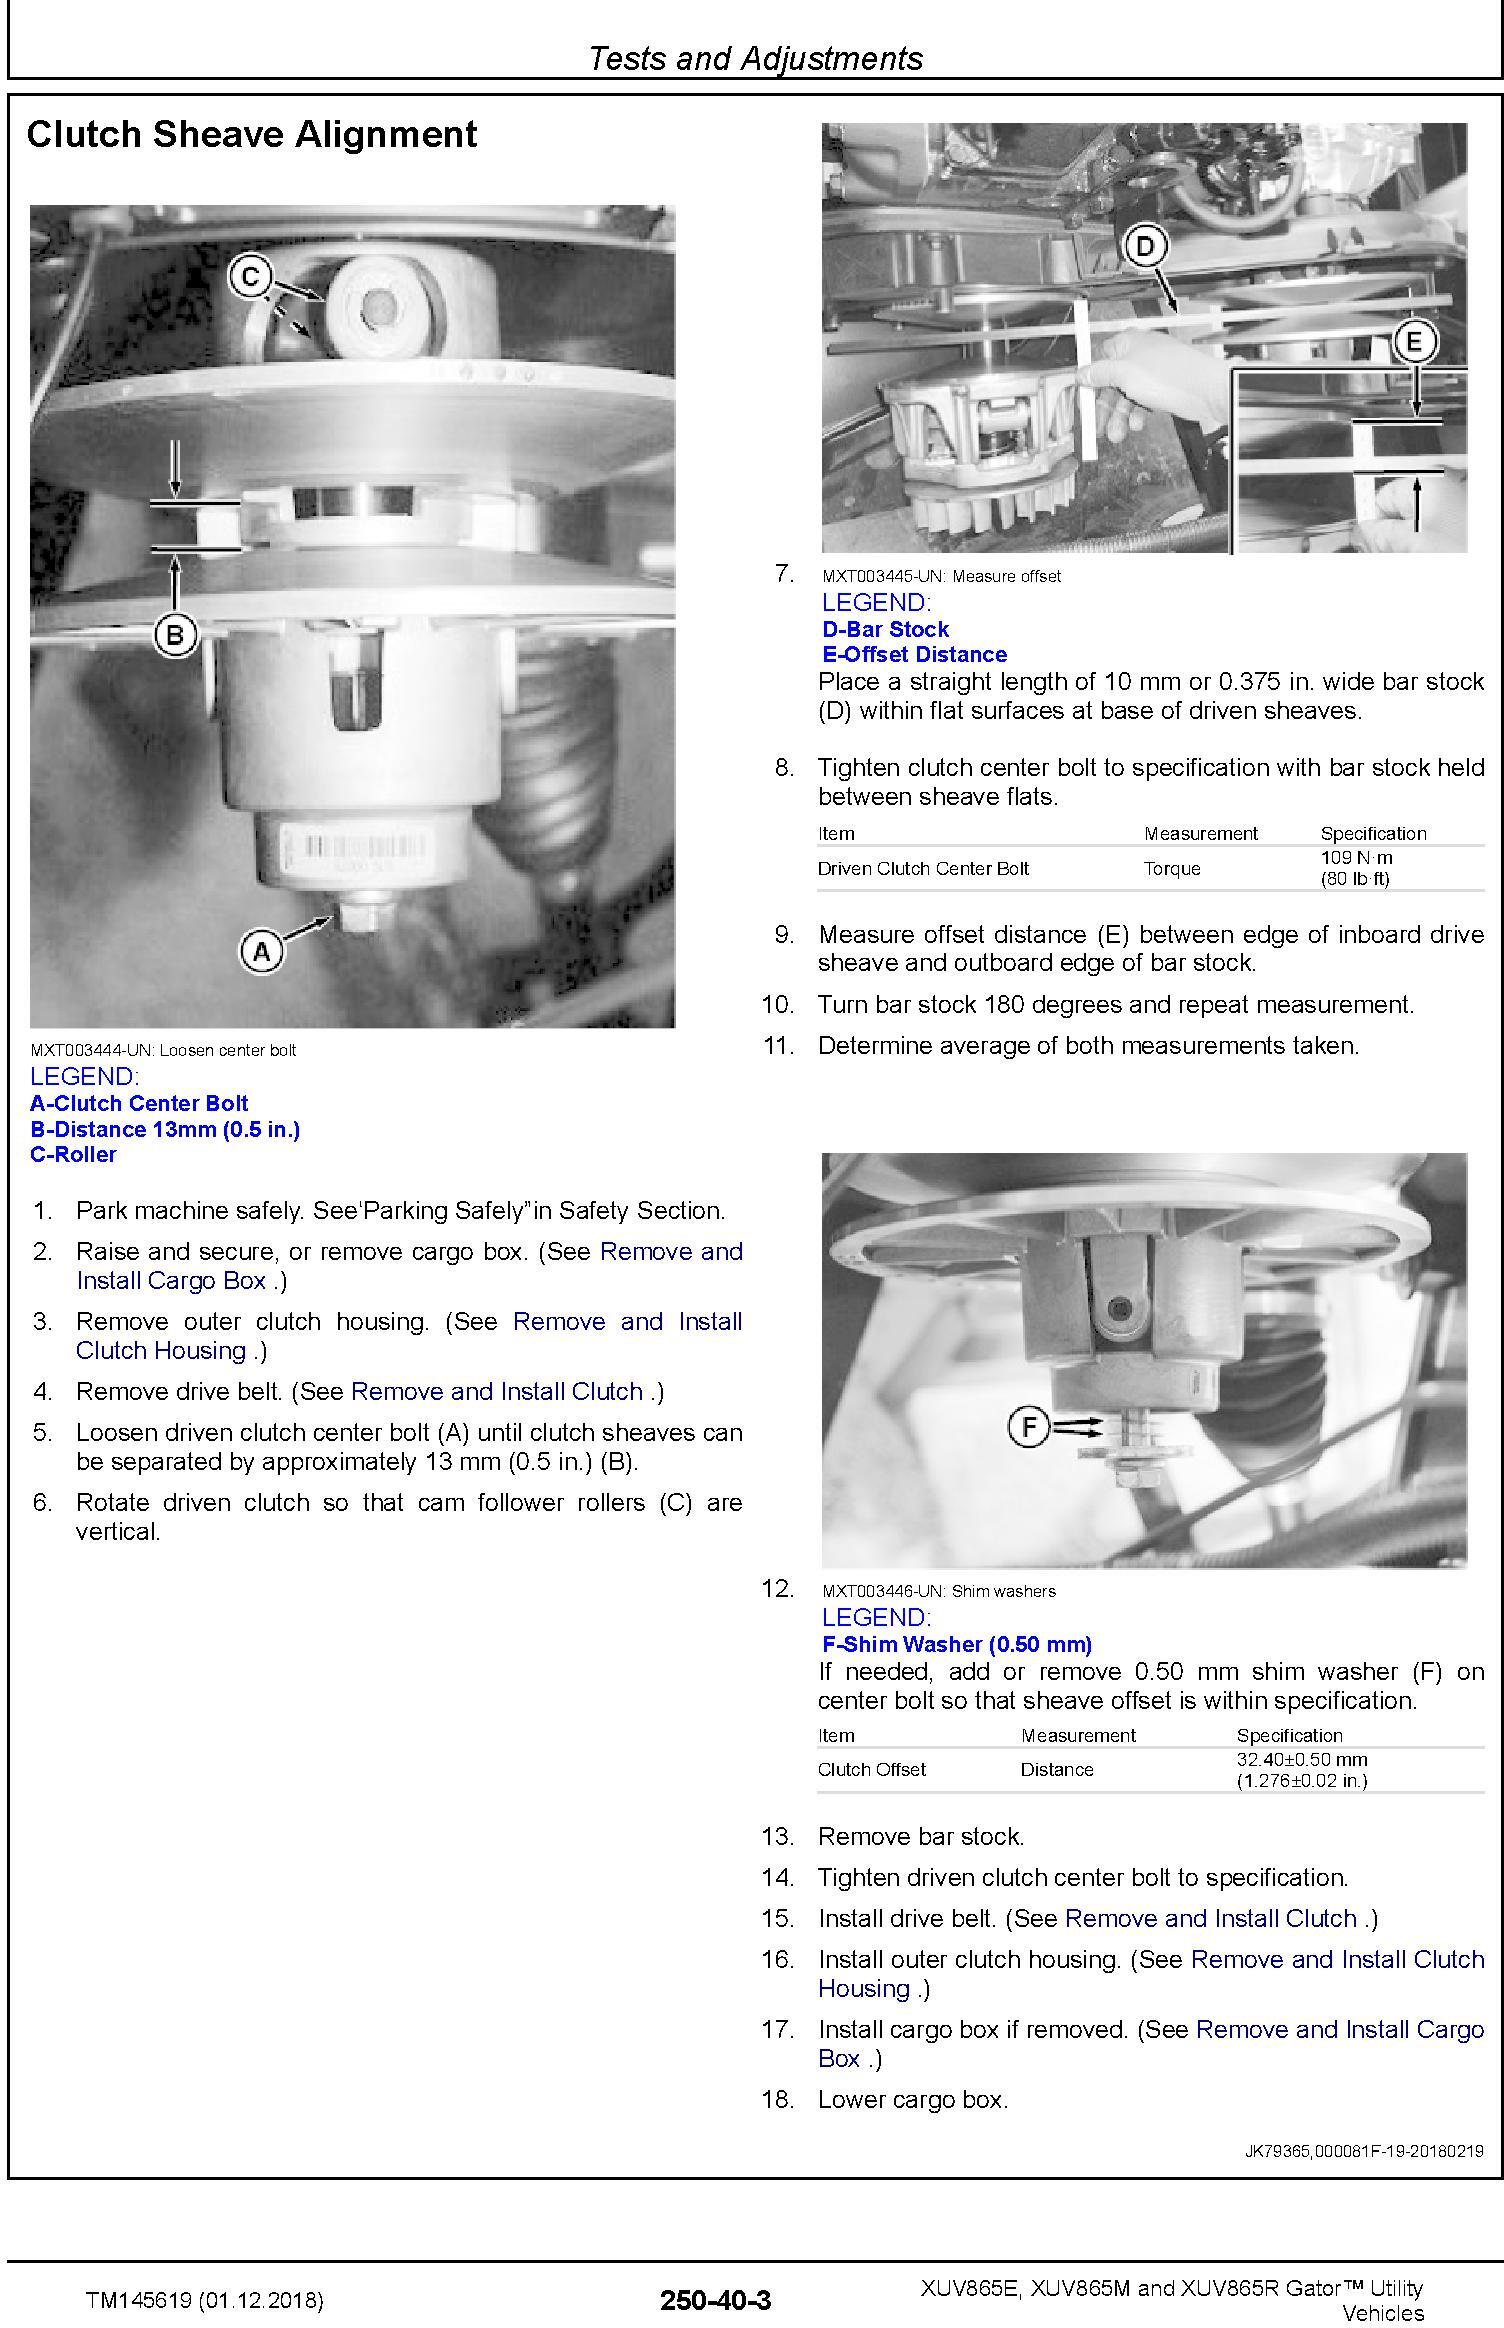 John Deere XUV865E, XUV865M, XUV865R Gator Utility Vehicles (SN.010001-) Technical Manual (TM145619) - 3